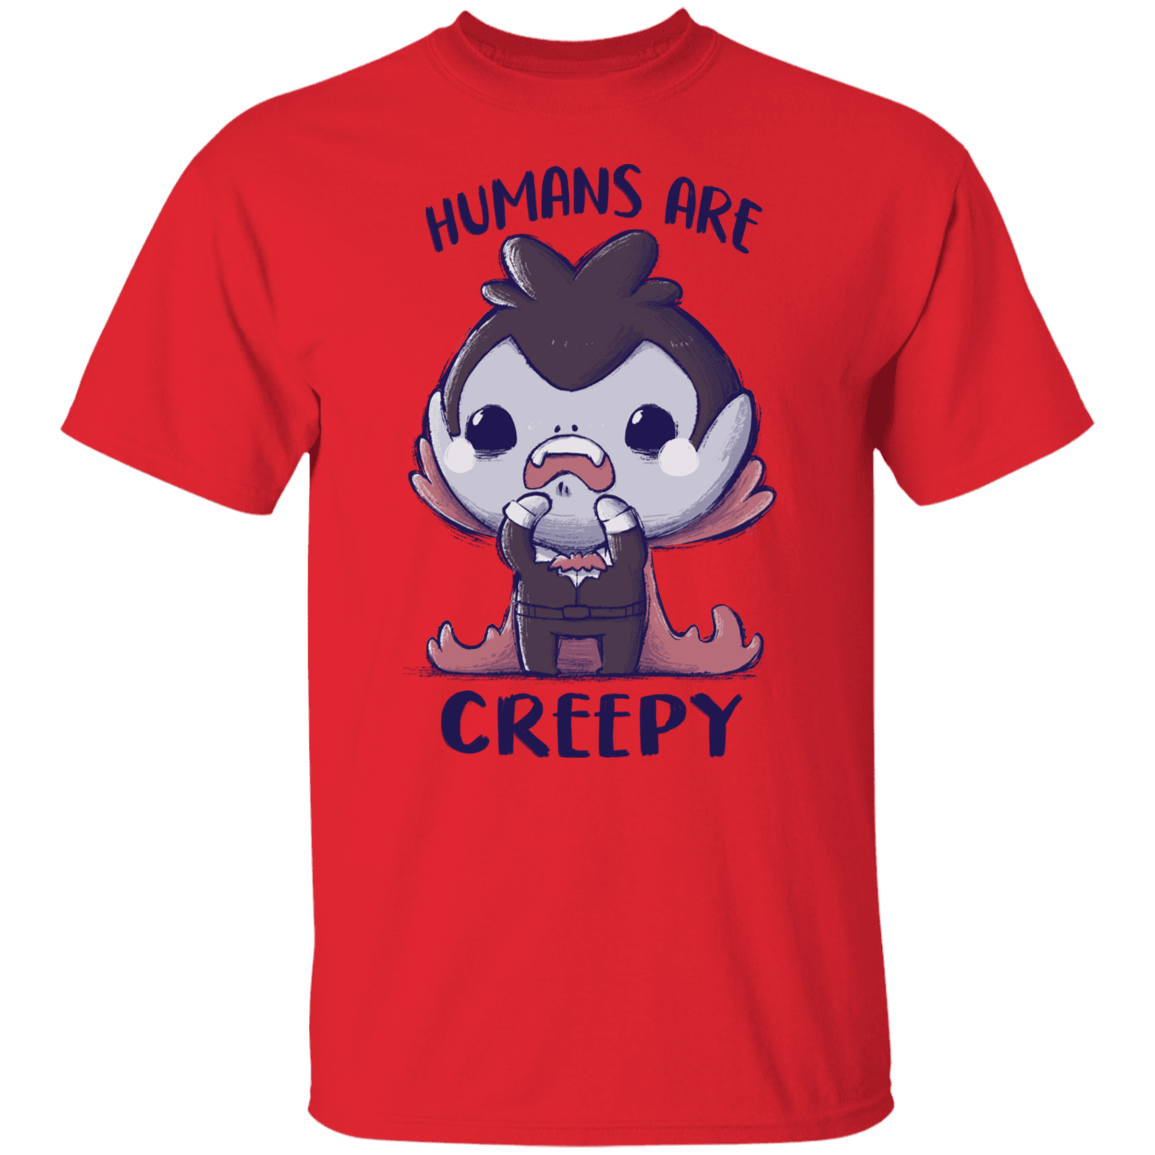 T-Shirts Red / S Creepy Humans T-Shirt